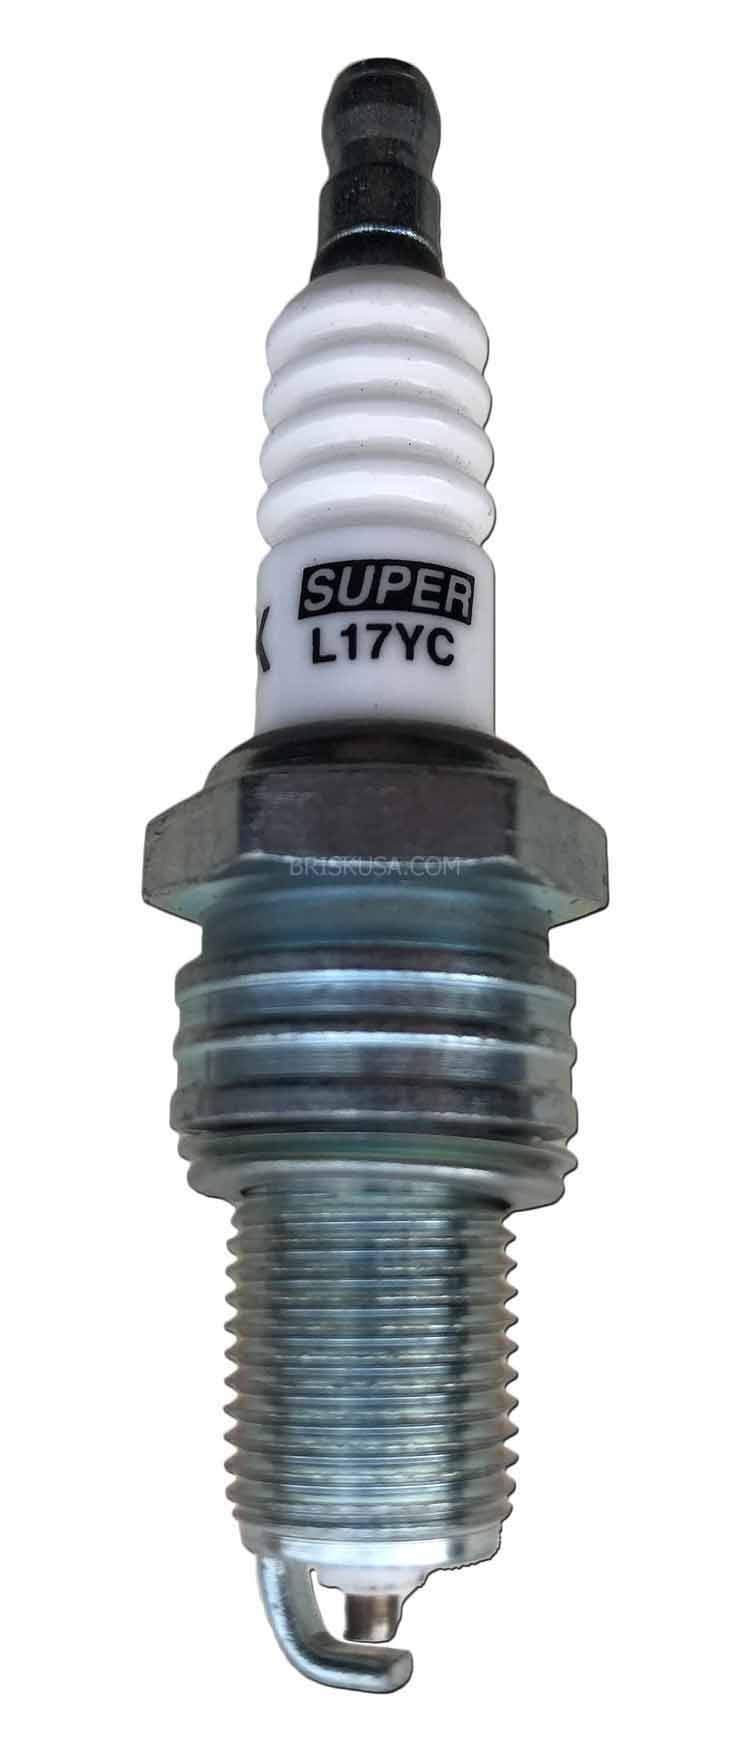 L17YC Spark Plug